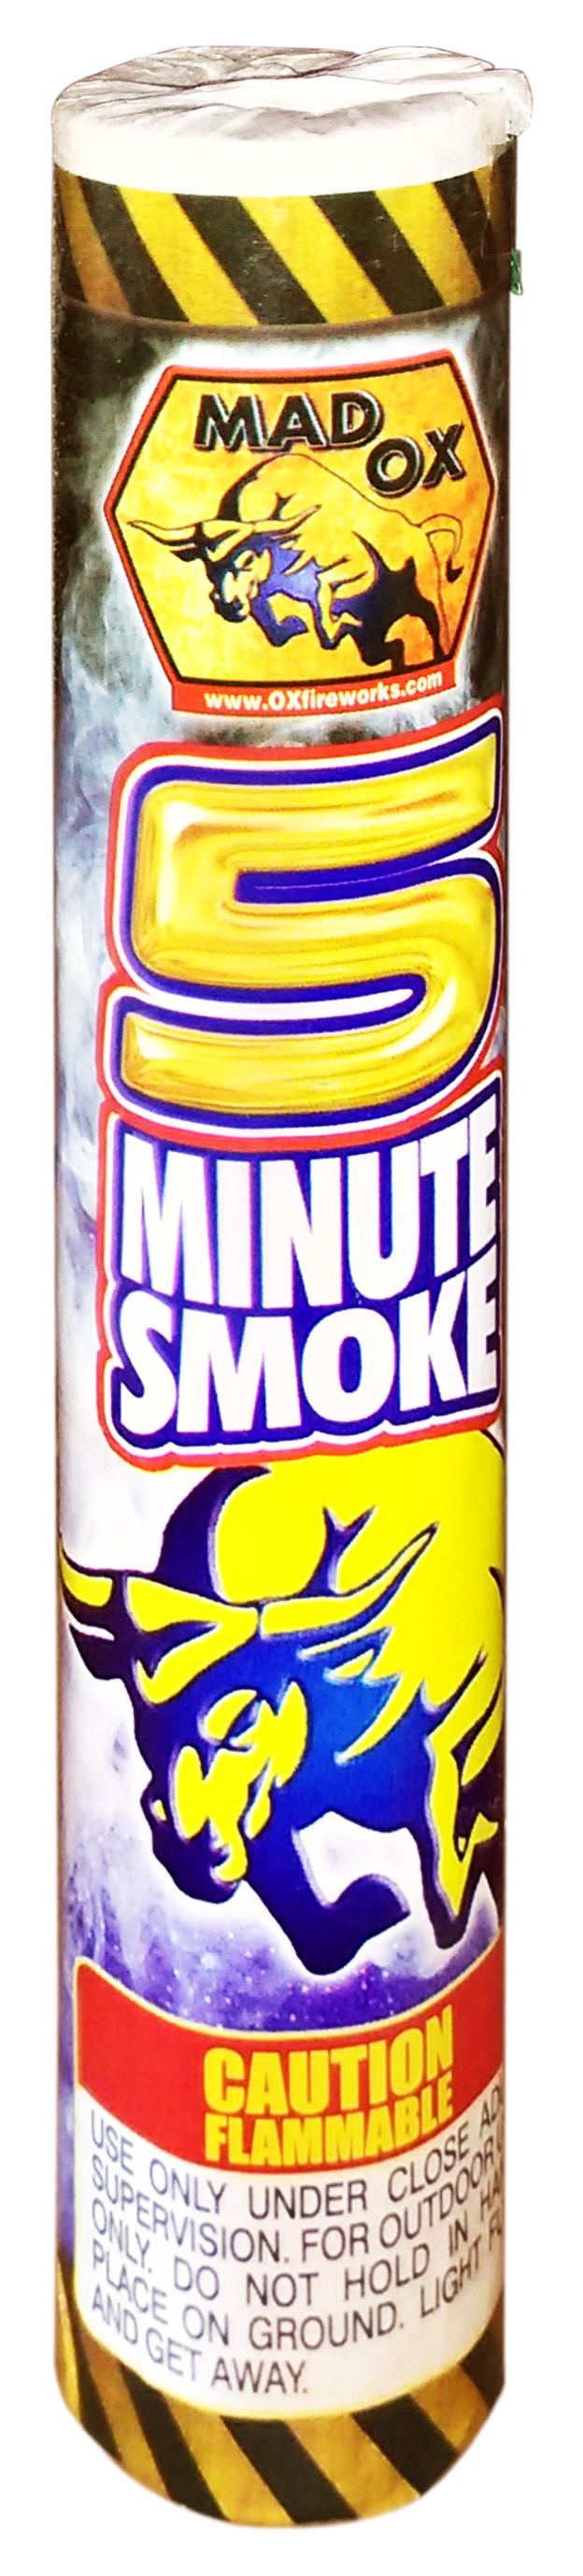 5 Minute Smoke